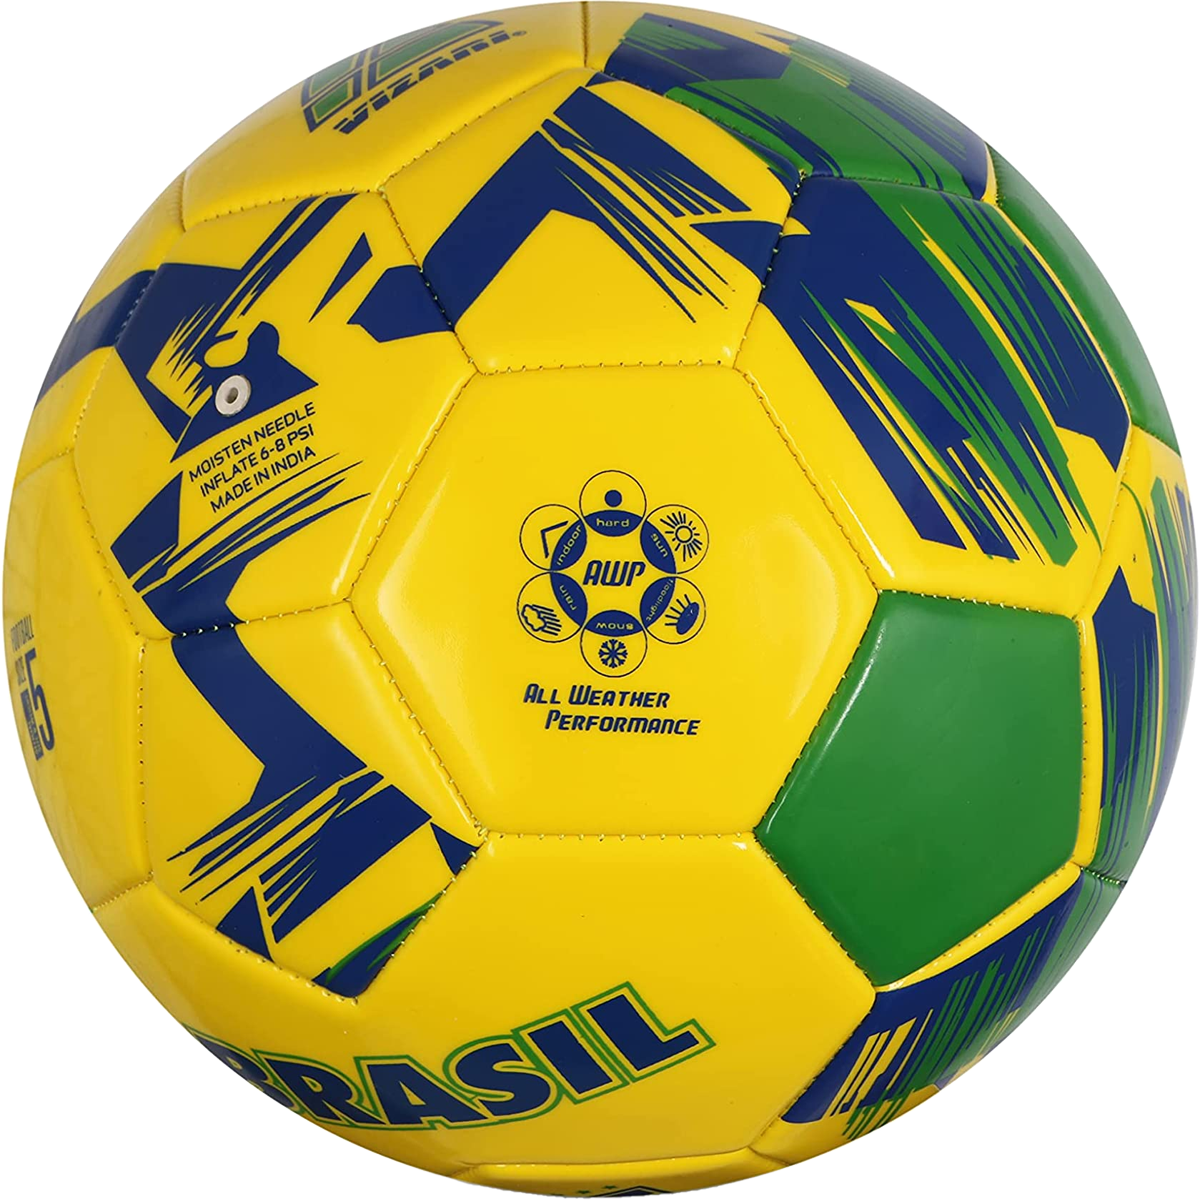 Brasil Country Mini Ball alternate view